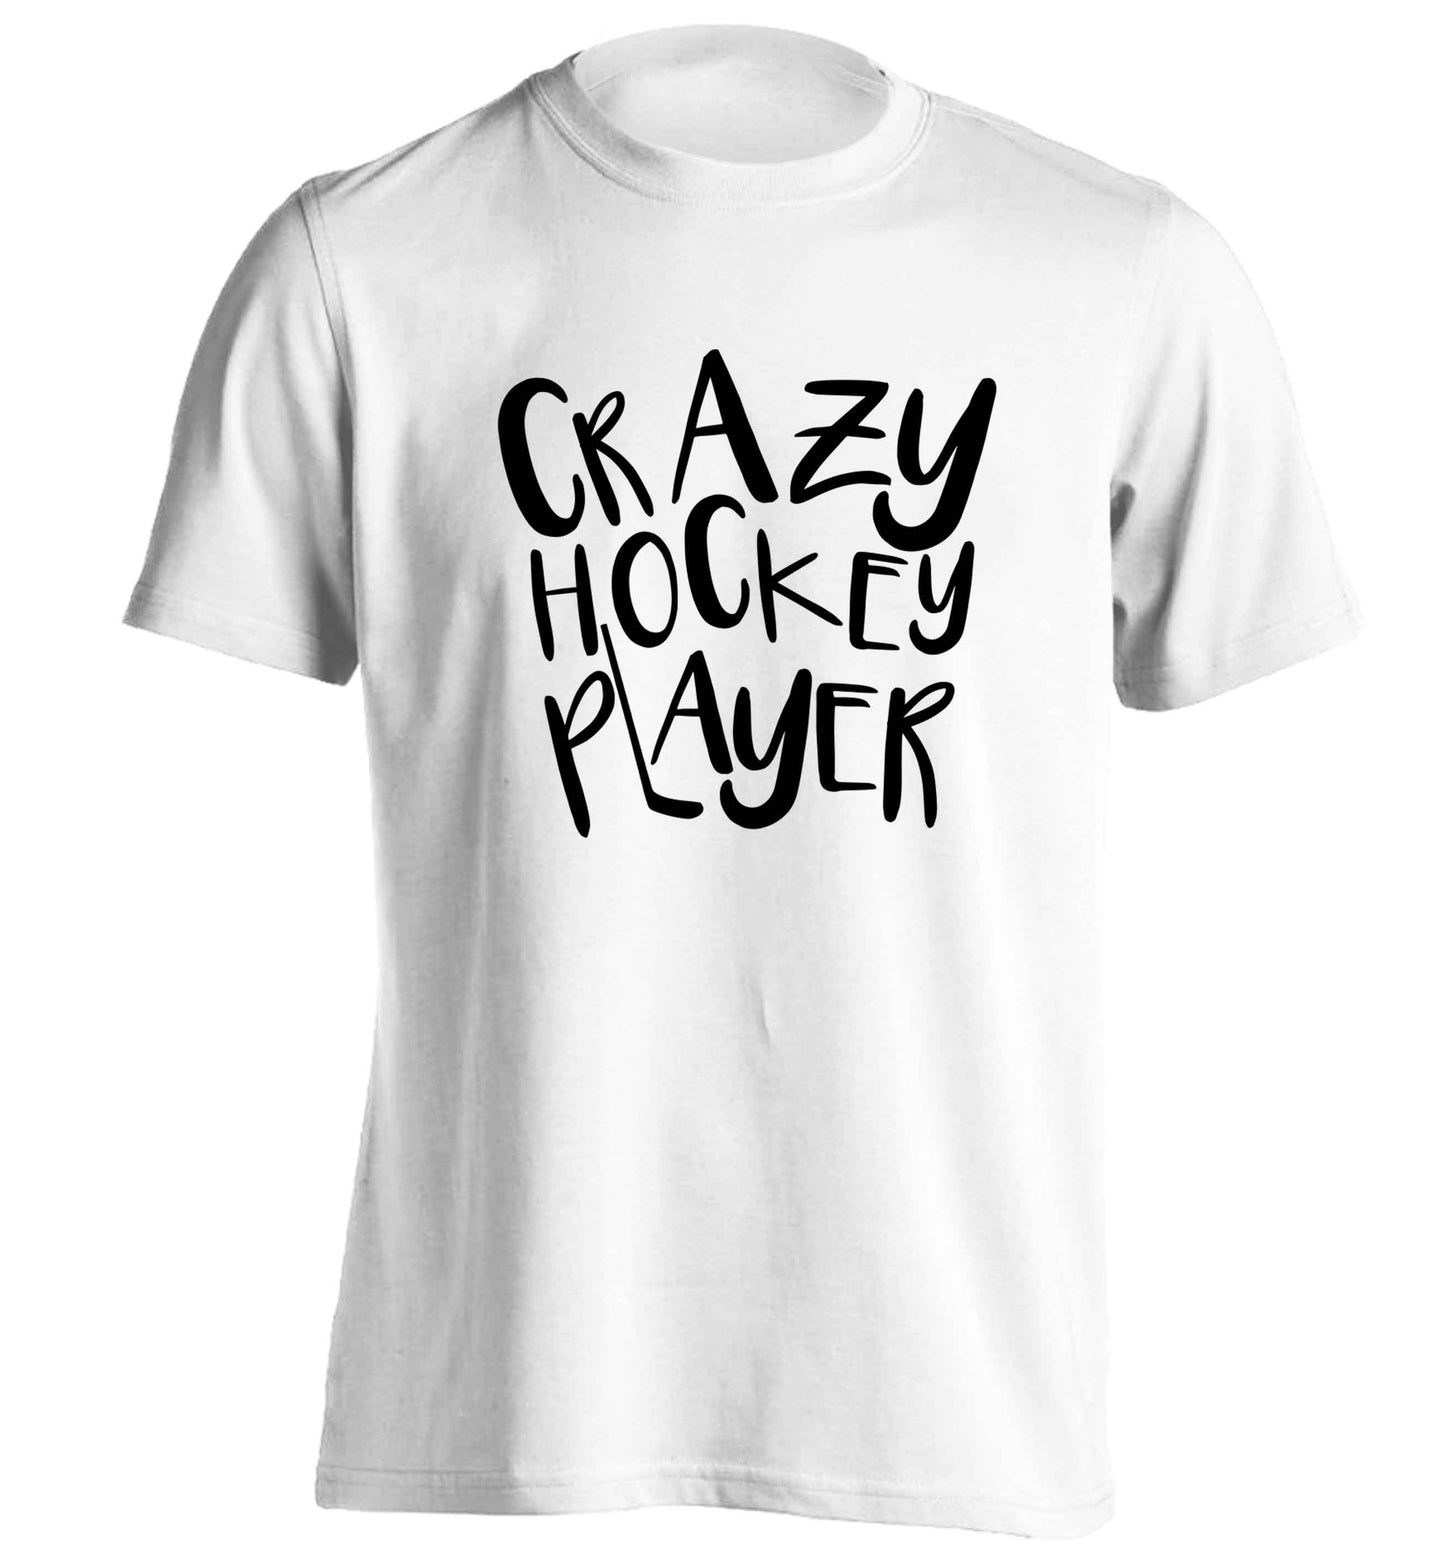 Crazy hockey player adults unisex white Tshirt 2XL